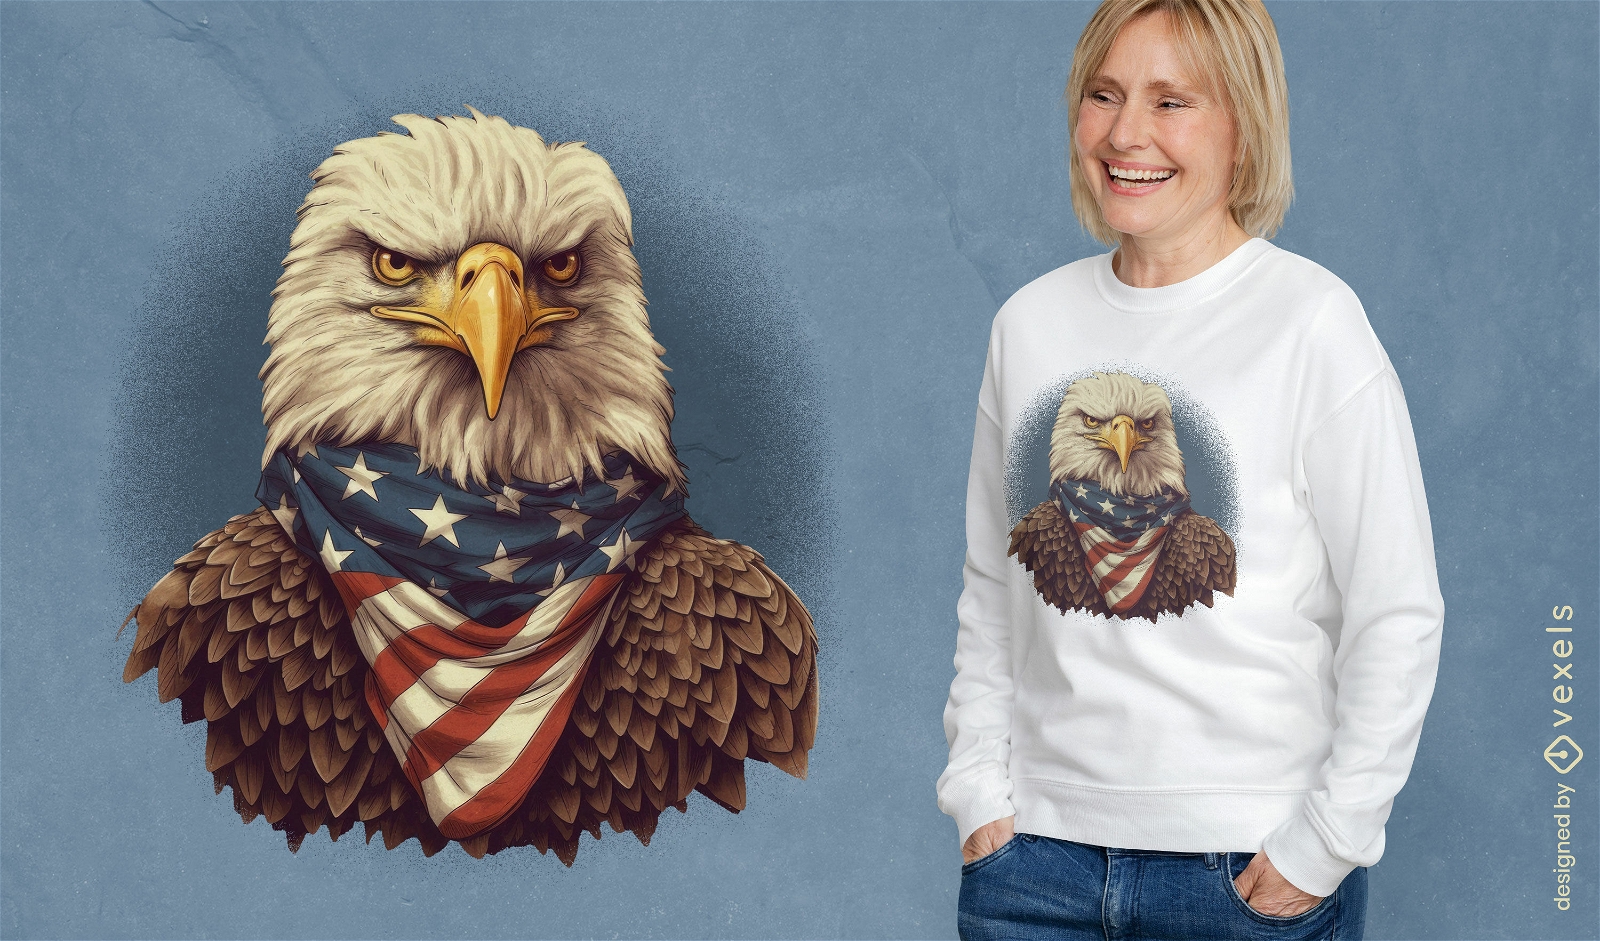 Patriotic eagle with flag t-shirt design